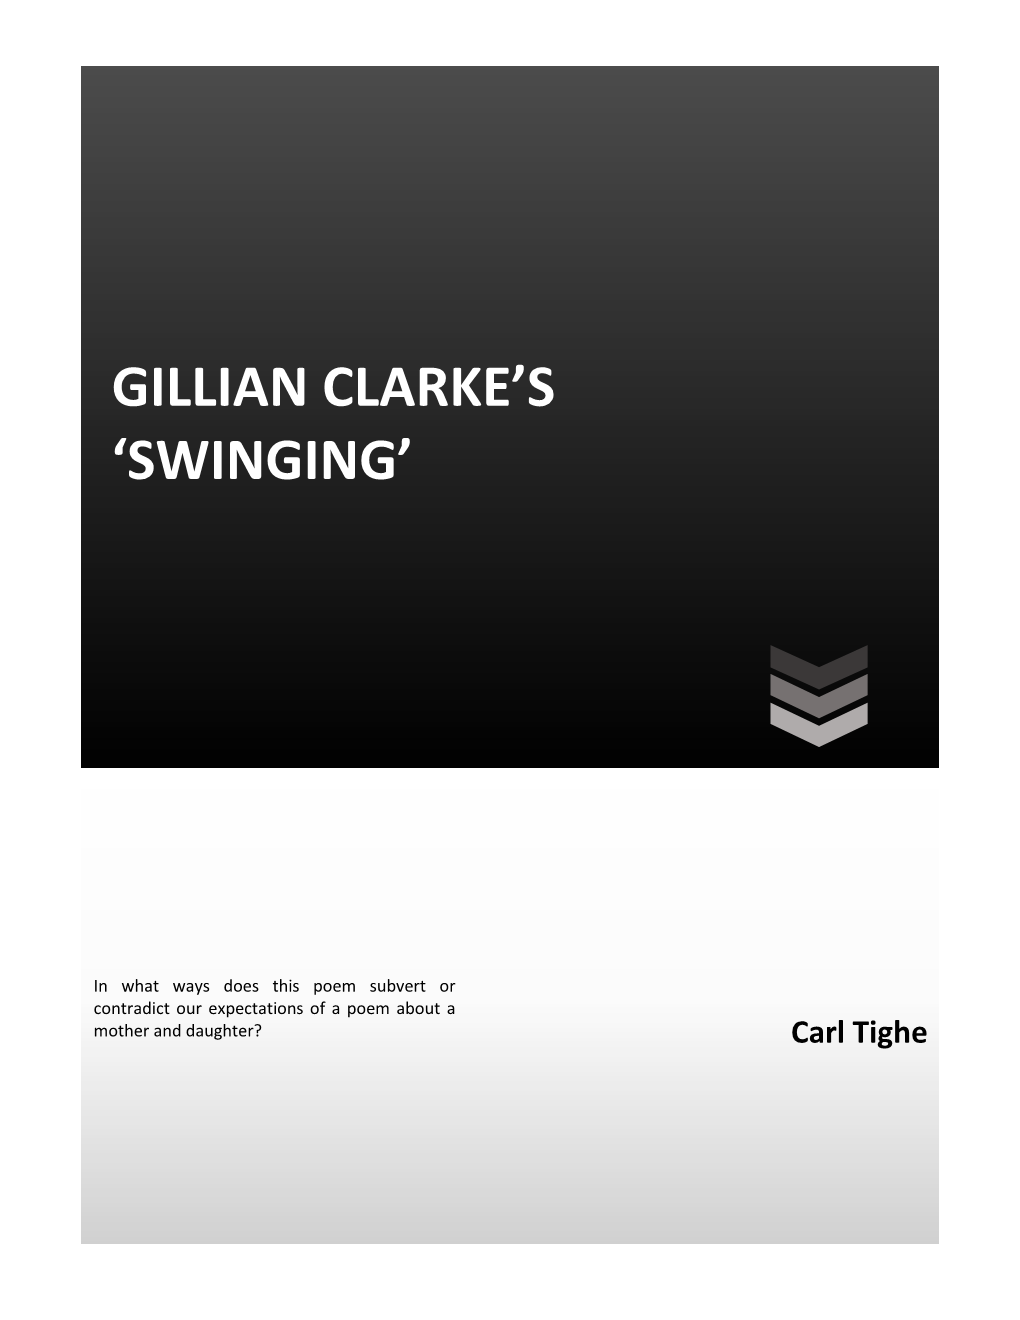 Gillian Clarke's Poetics in 'Swinging'